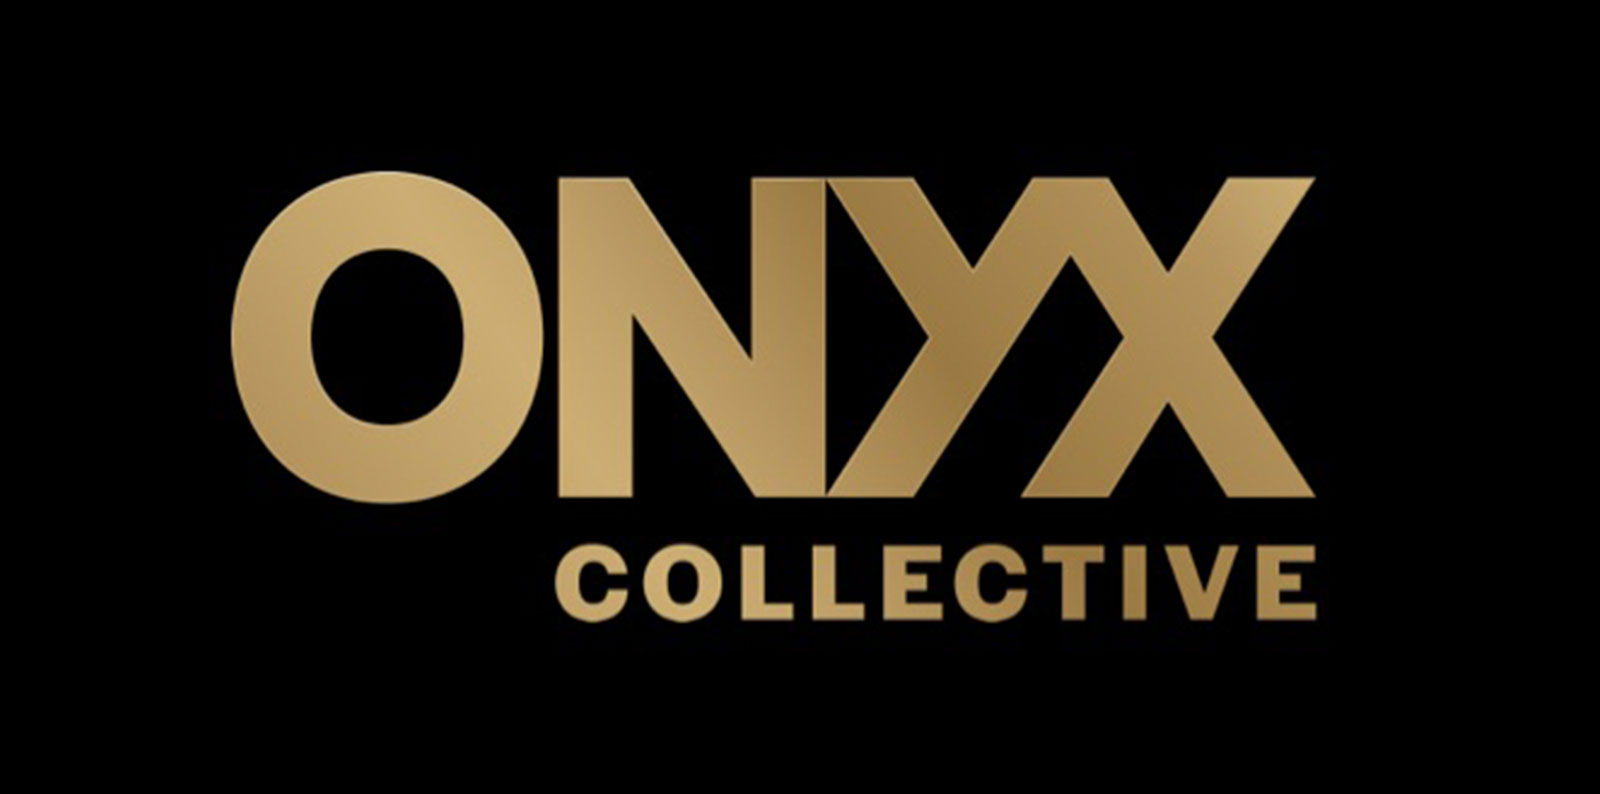 Disney’s Onyx Collective Spotlights POC Filmmakers on Hulu and Disney+ International